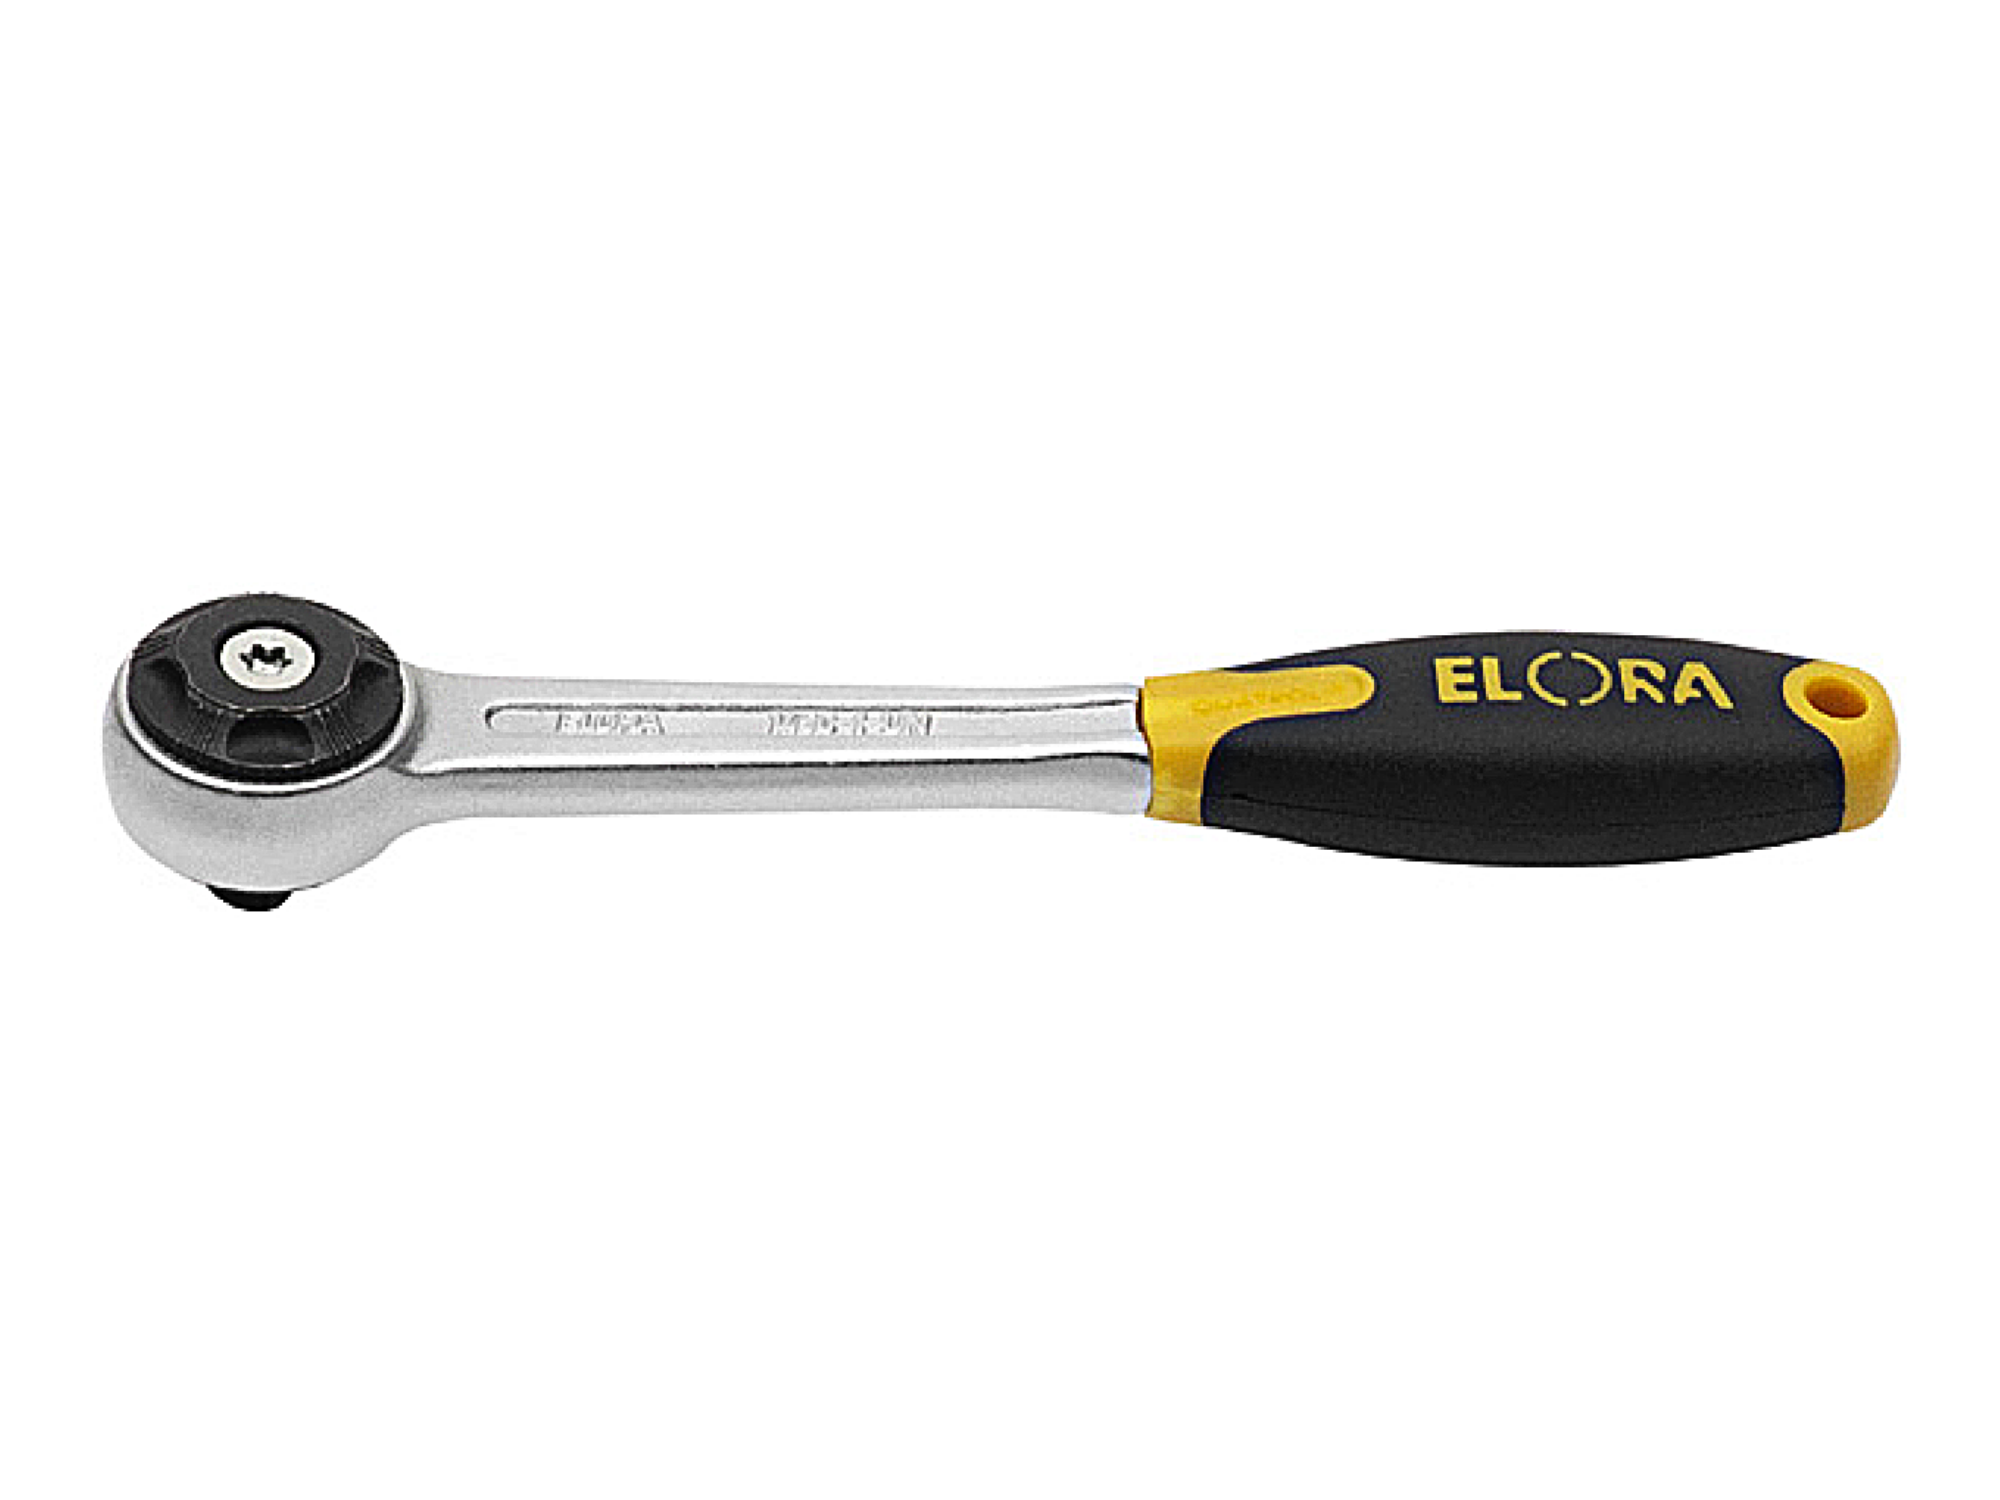 ELORA 1450-1UN 1/4" Reversible Ratchet, Fine Tooth (ELORA Tools) - Premium 1/4" Reversible Ratchet from ELORA - Shop now at Yew Aik.